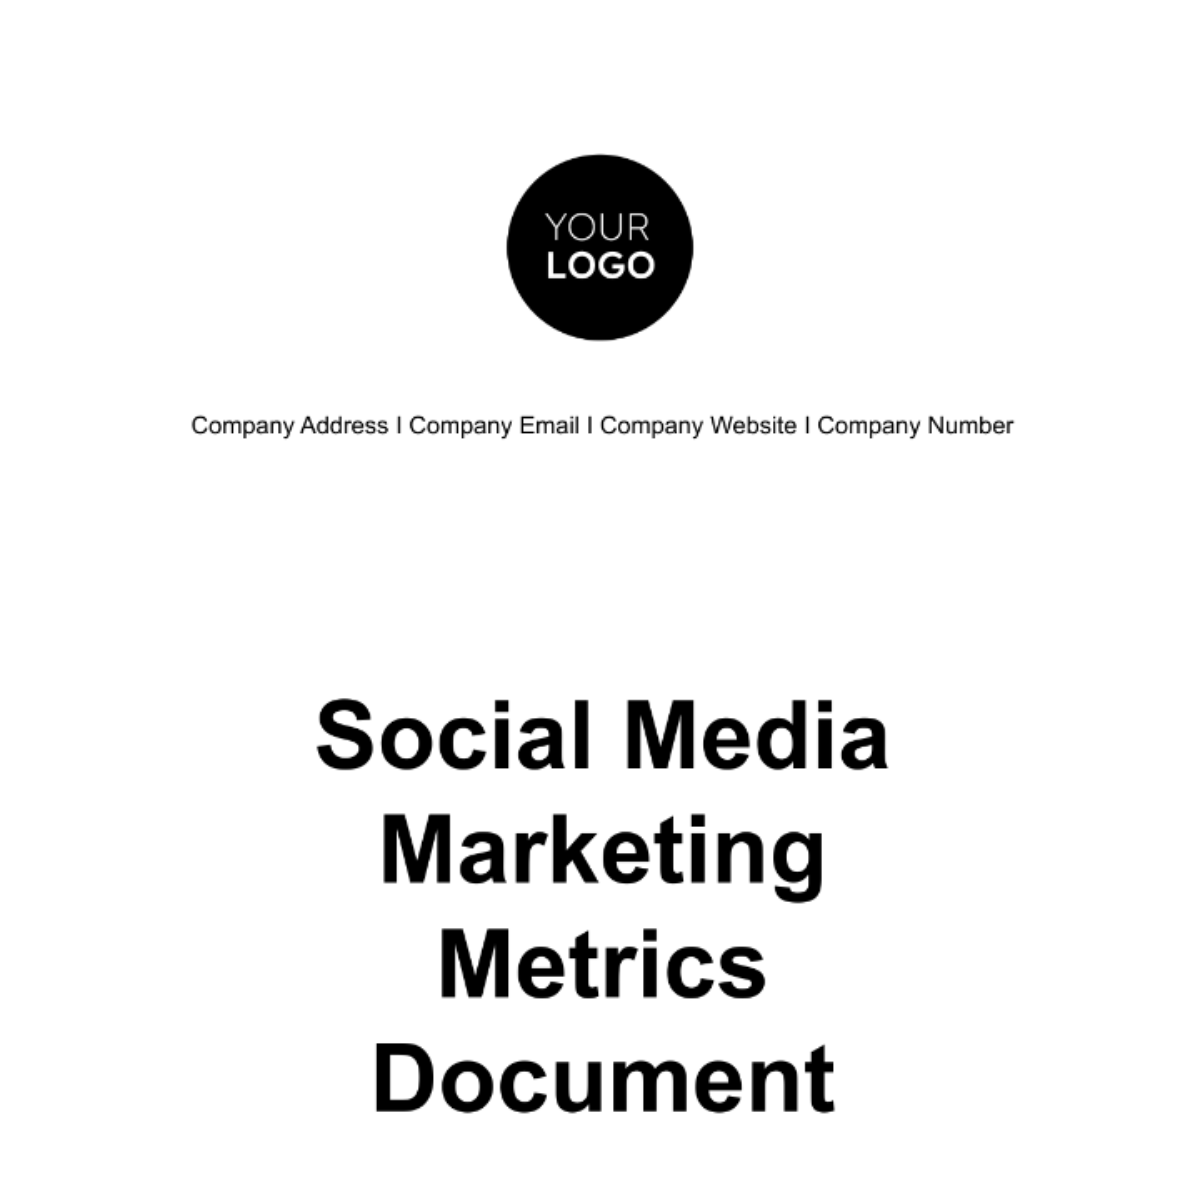 Social Media Marketing Metrics Document Template